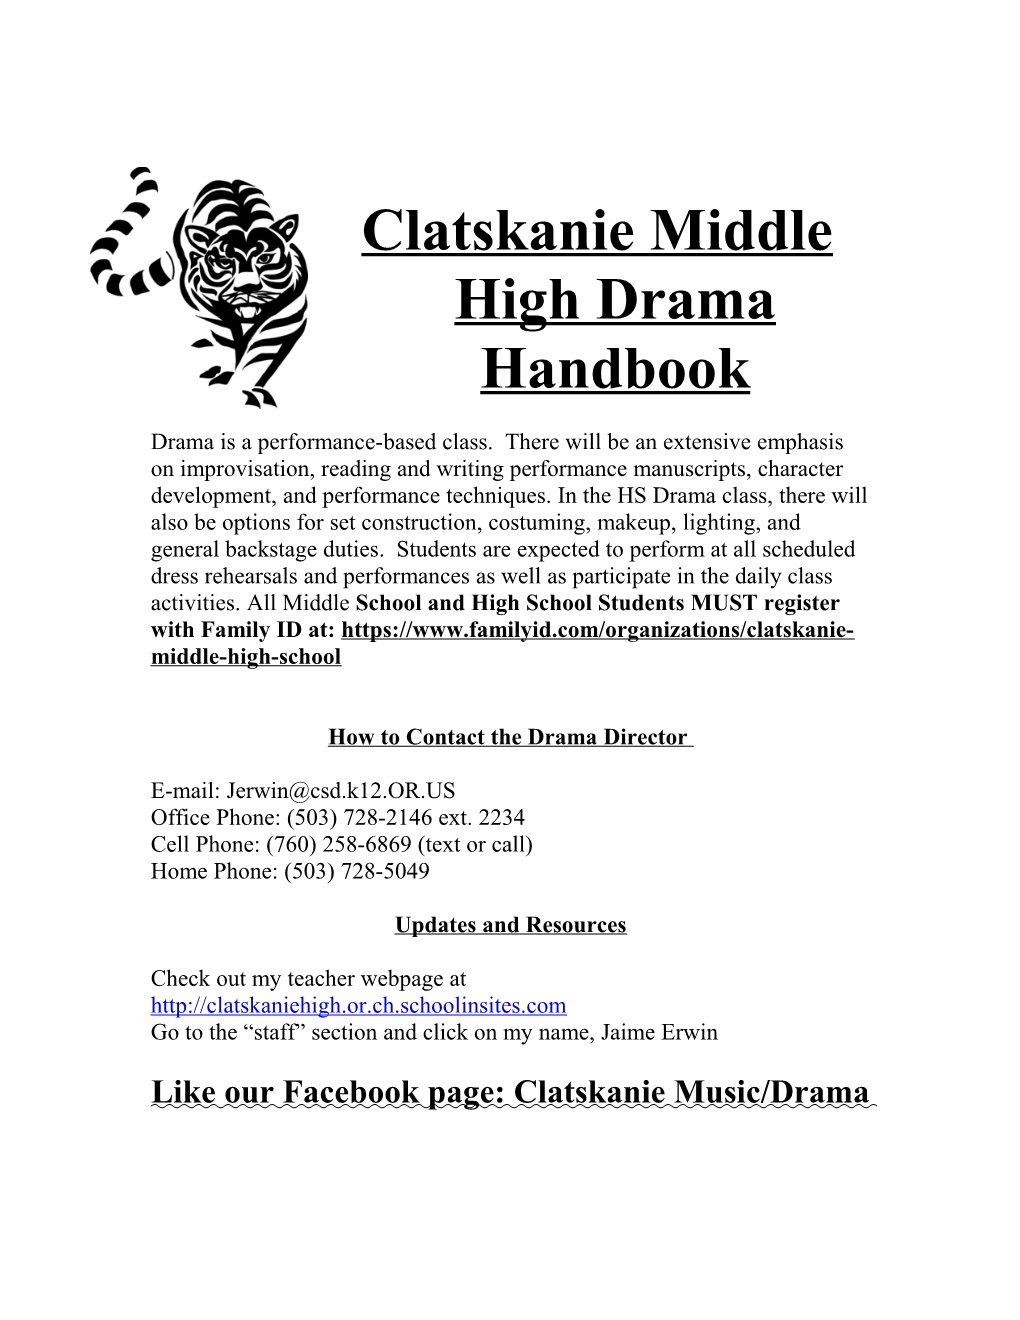 Clatskanie Middle High Drama Handbook